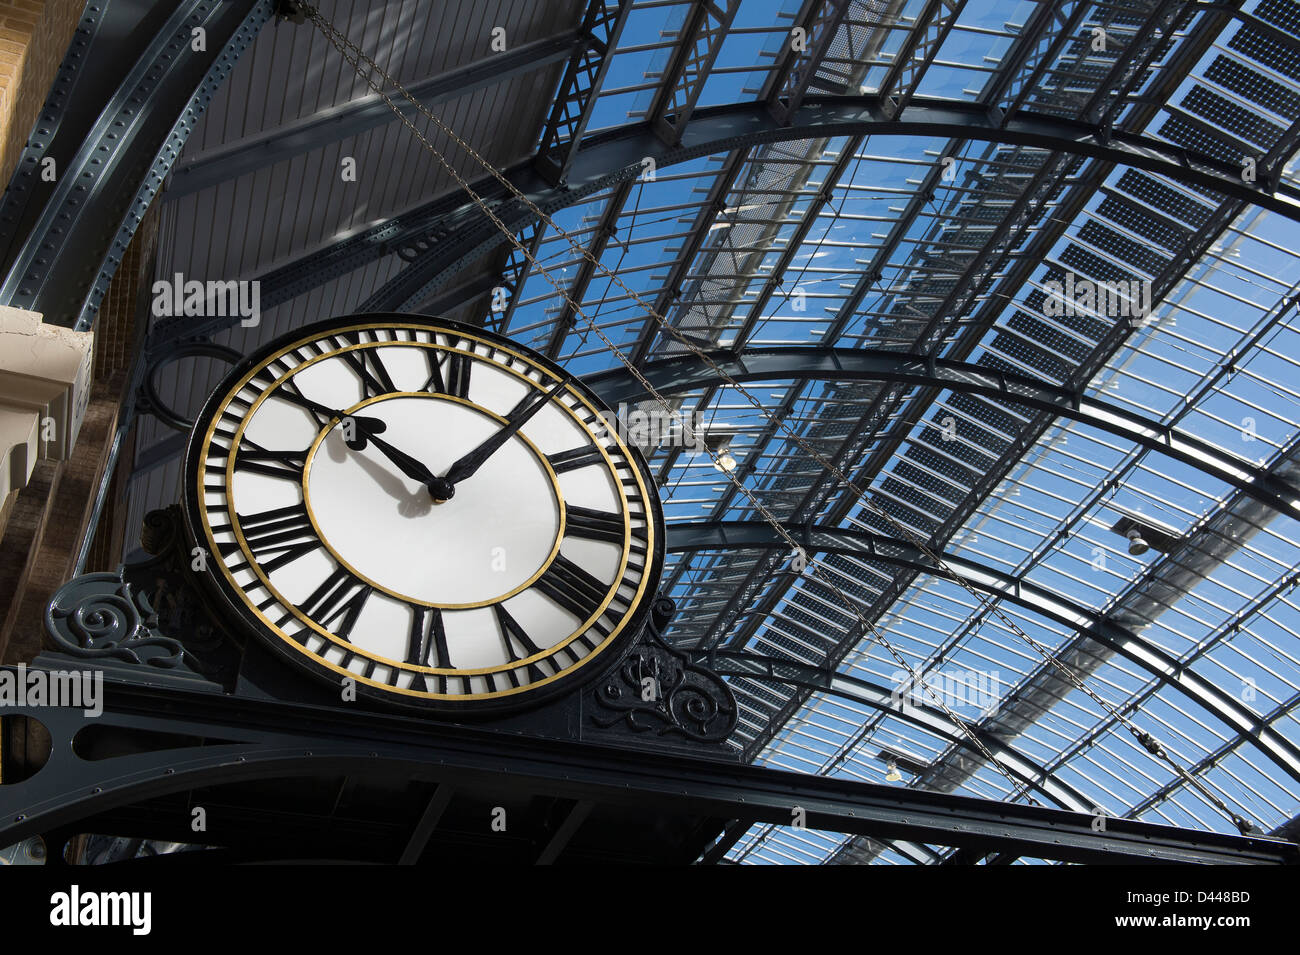 Plattform-Uhr am Kings Cross Bahnhof, London, England Stockfotografie -  Alamy